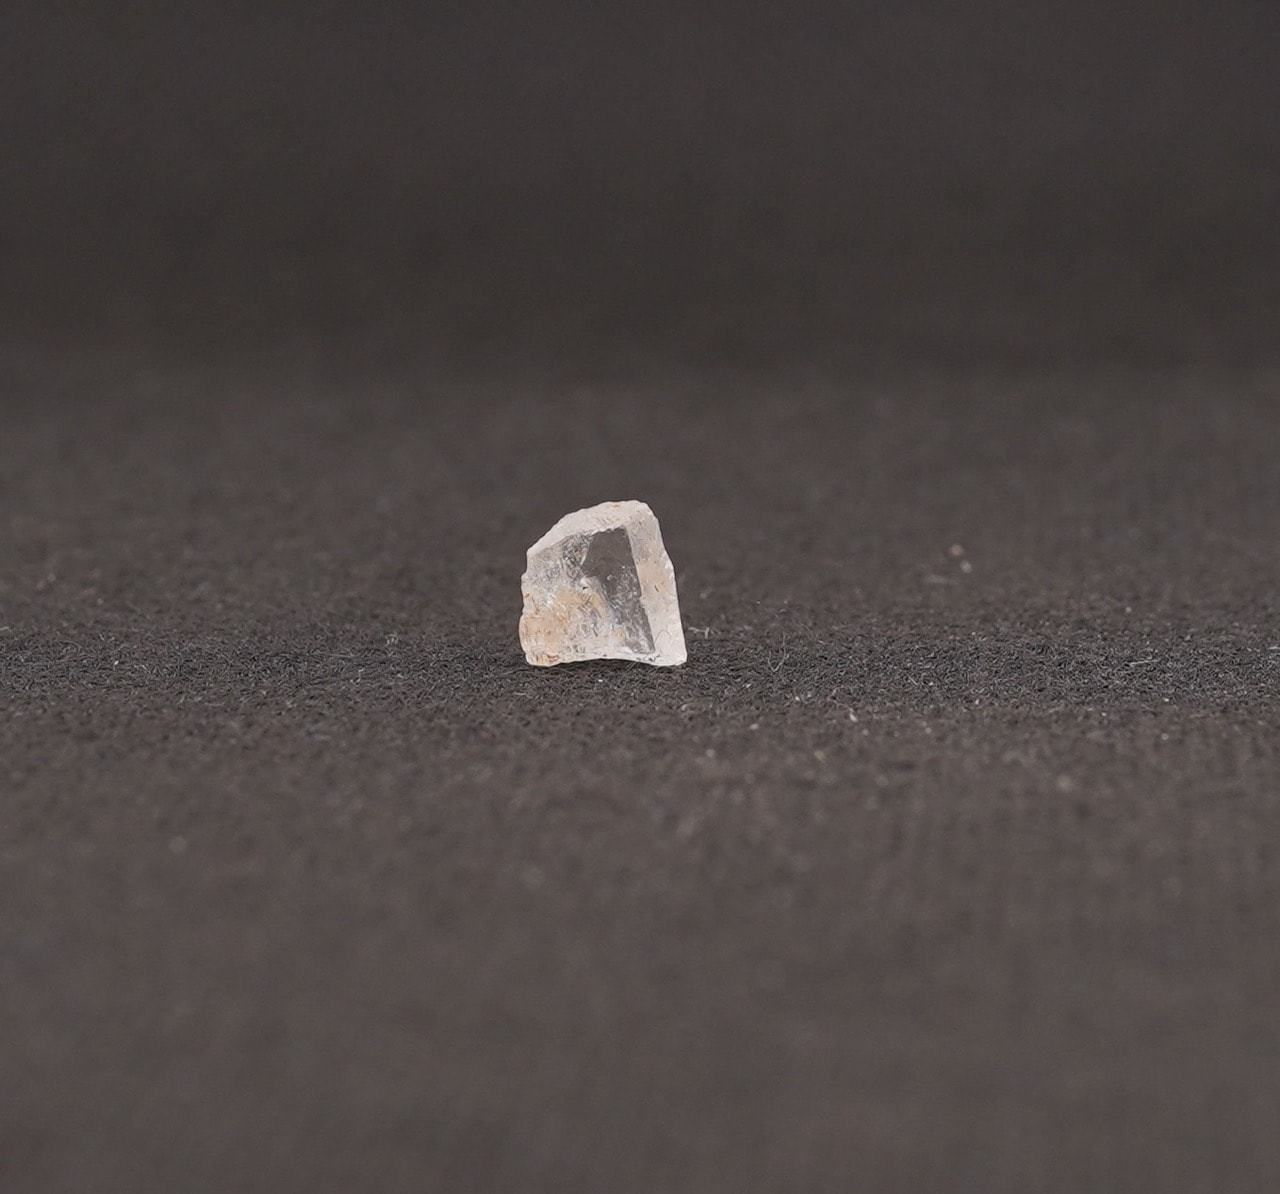 Fenacit nigerian cristal natural unicat f312